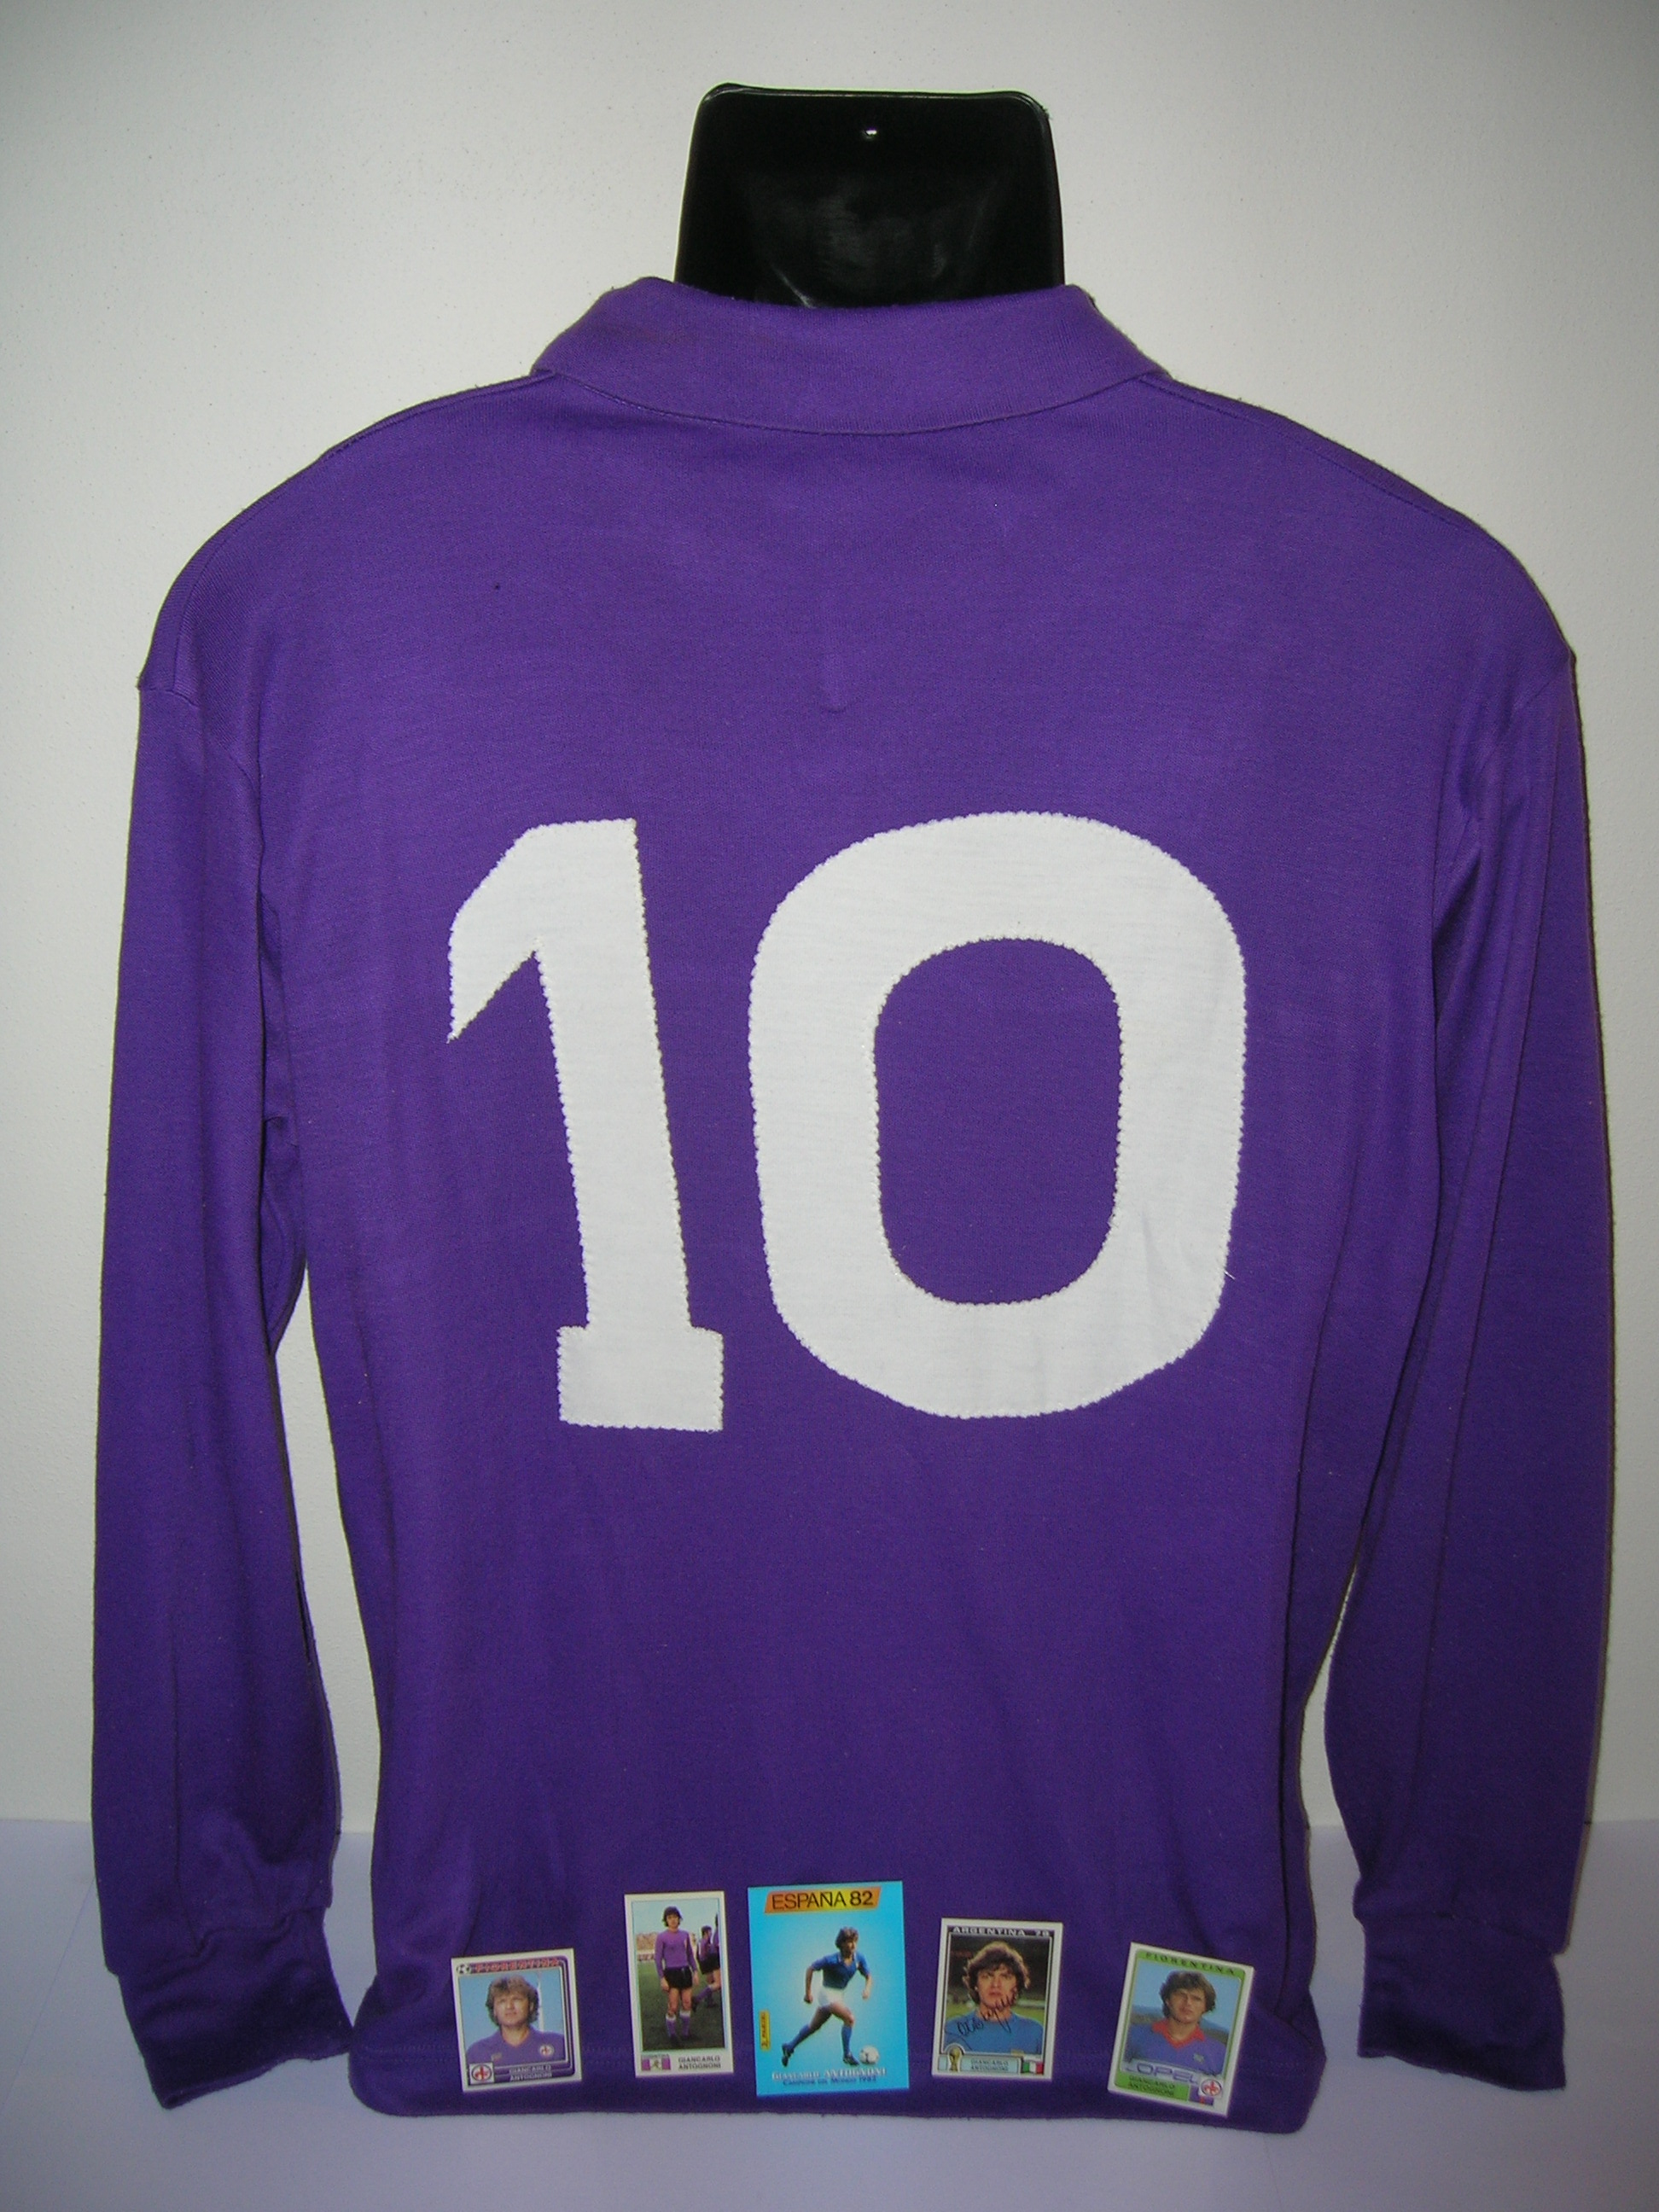 Antognoni G. n.10 Fiorentina 1985-86 D